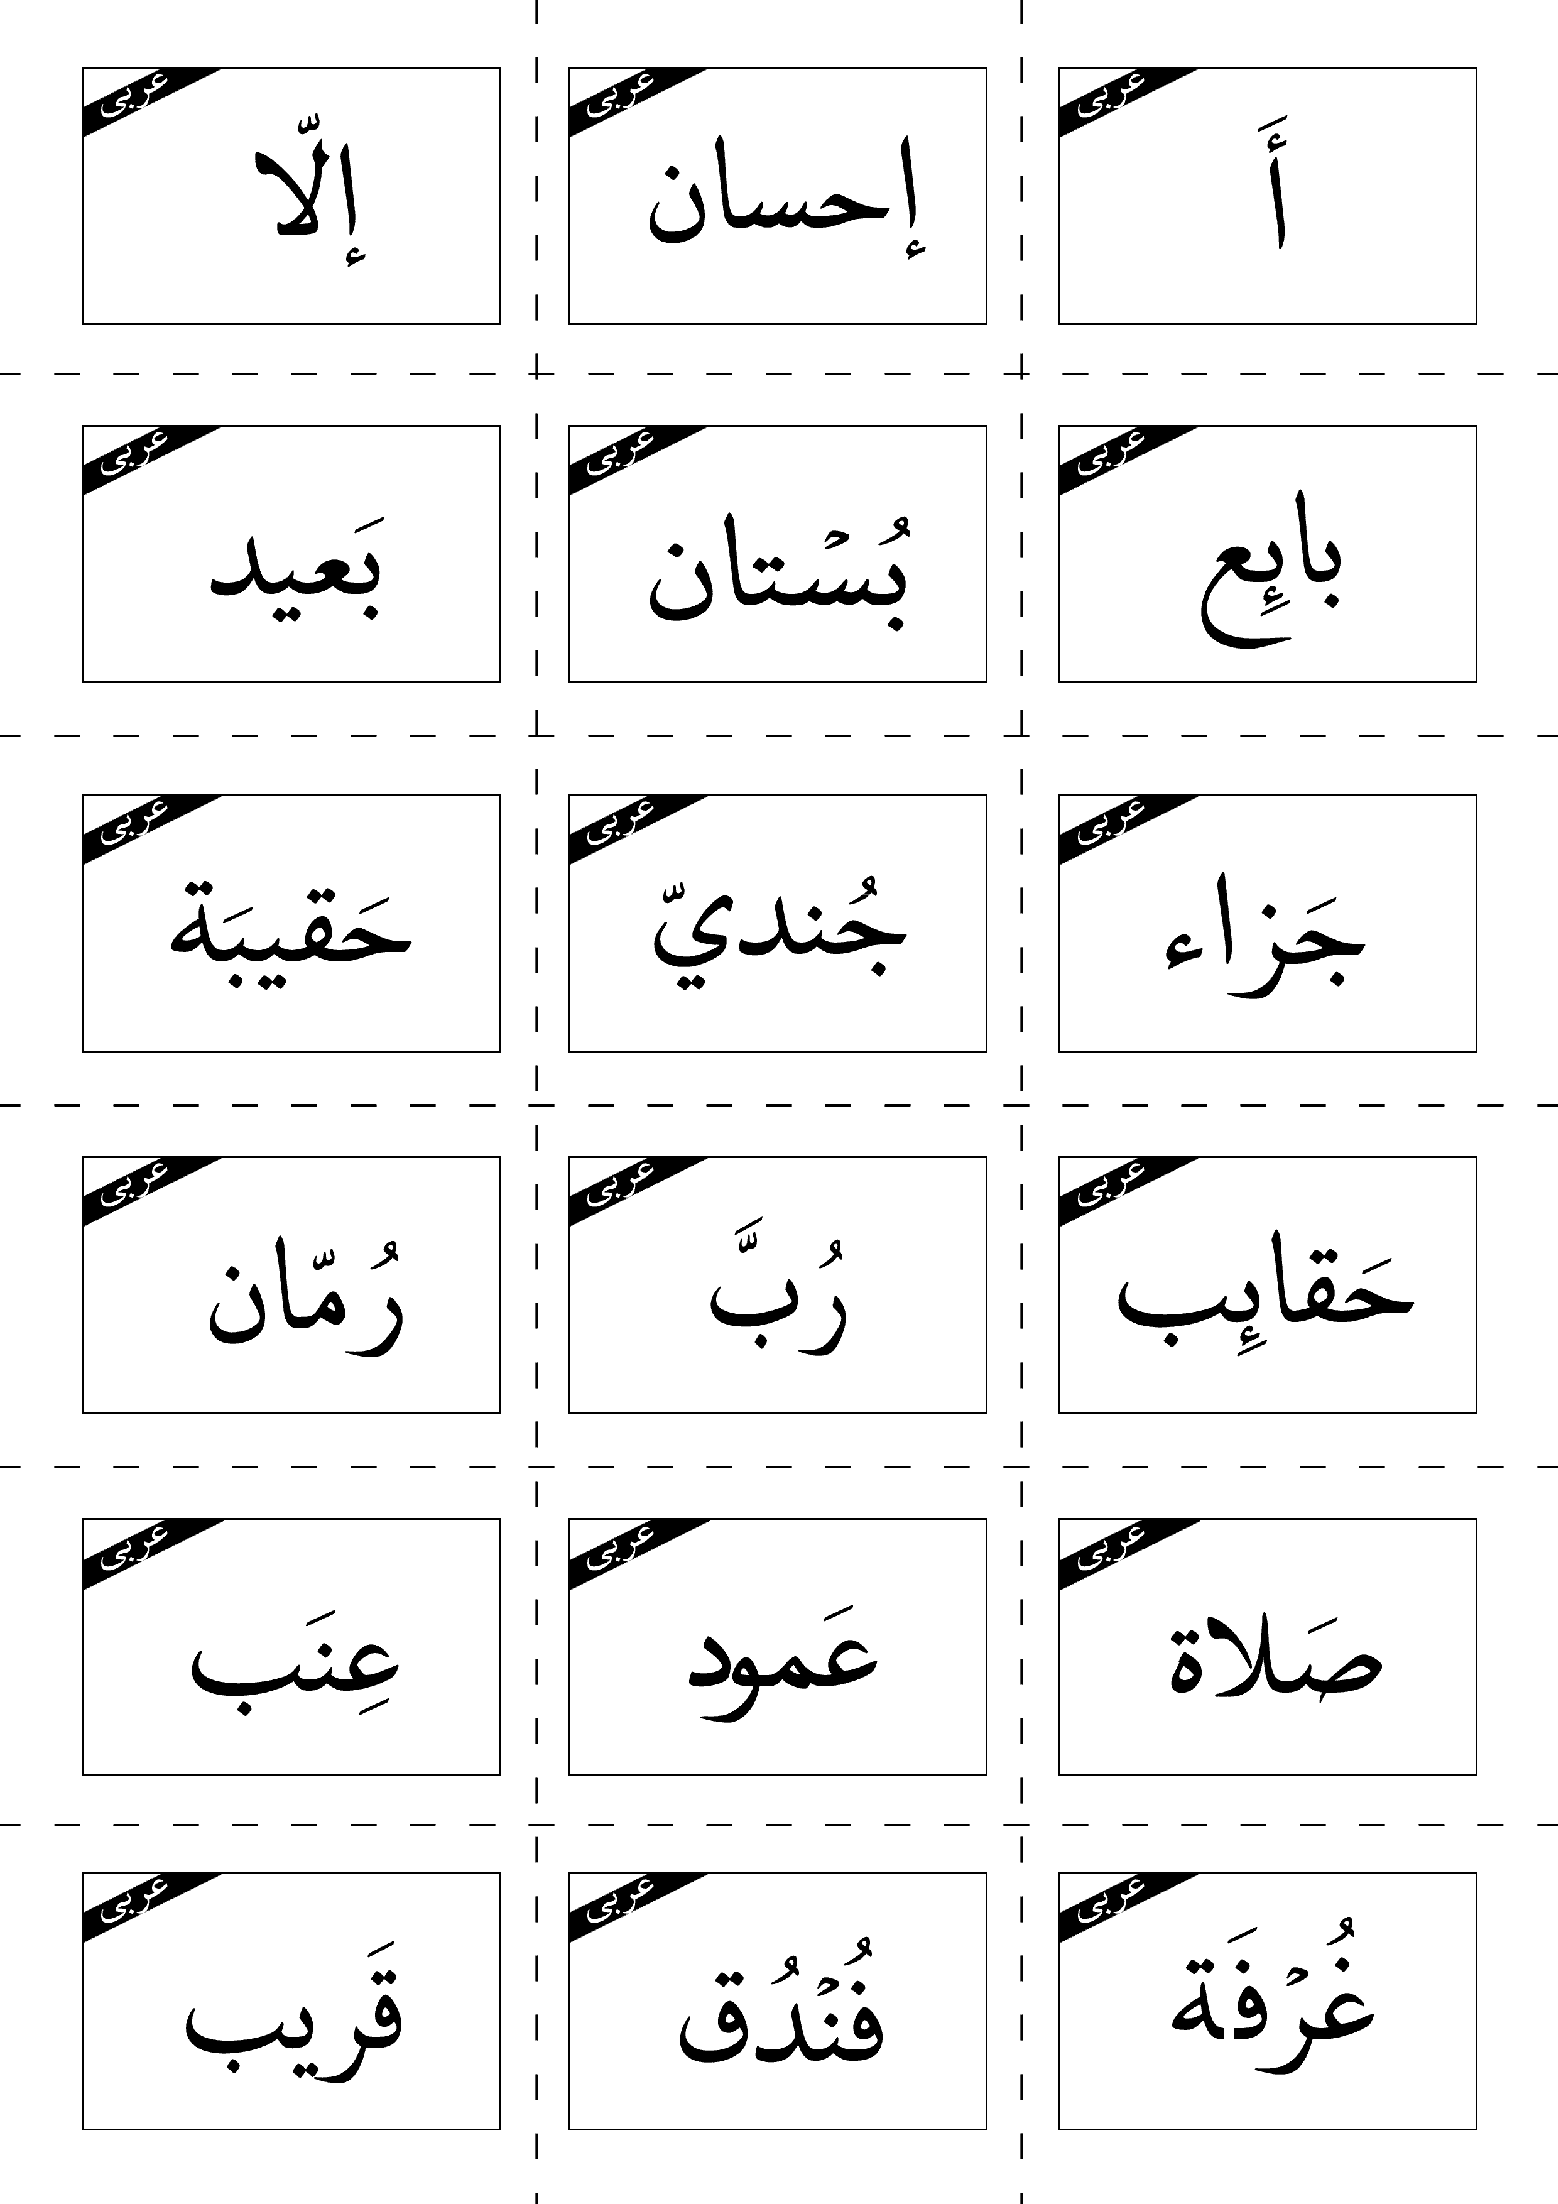 فلش کارت‌های لغات درس 2 عربی هفتم  | قسمت 1 تا 3: جَواهِرُ الْکَلامِ، کُنوزُ الْحِکَمِ، کَنْزُ النَّصيحَةِ